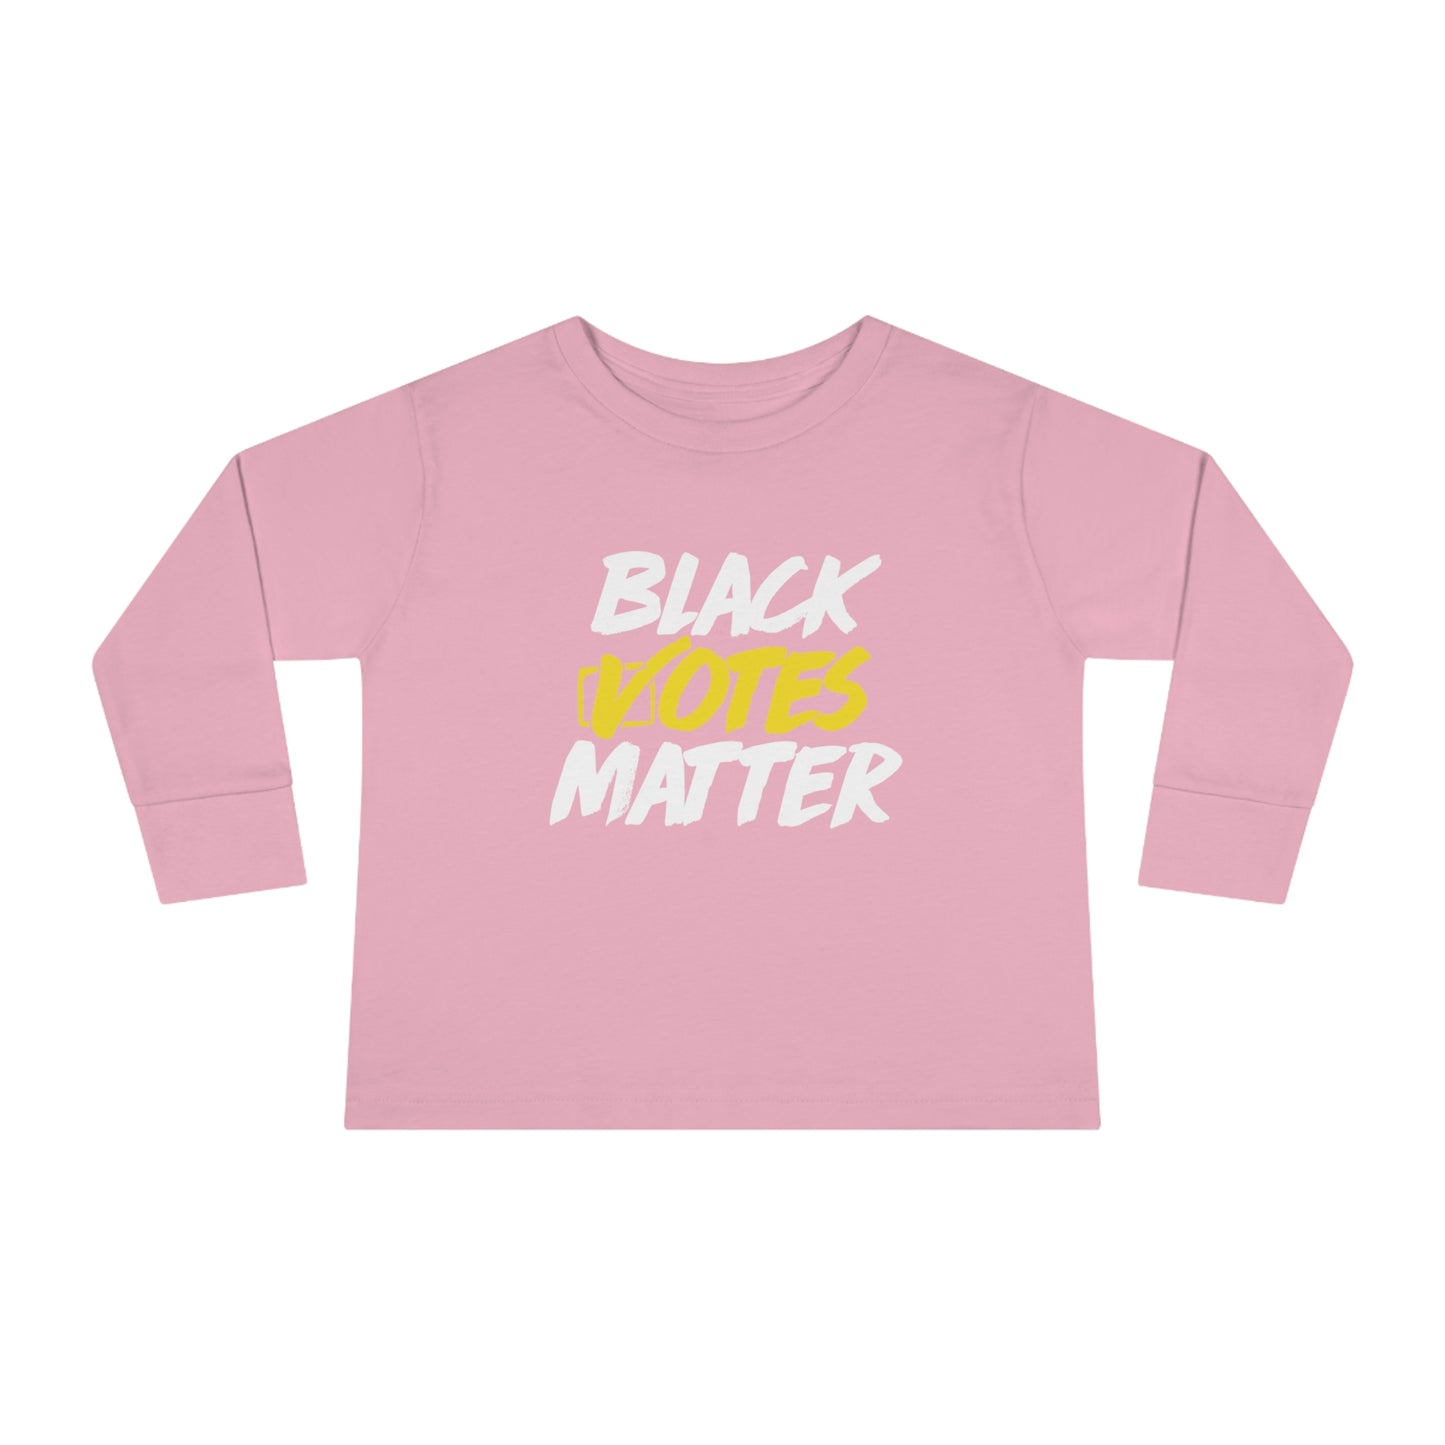 “Black Votes Matter” (white text)" Toddler Long Sleeve Tee